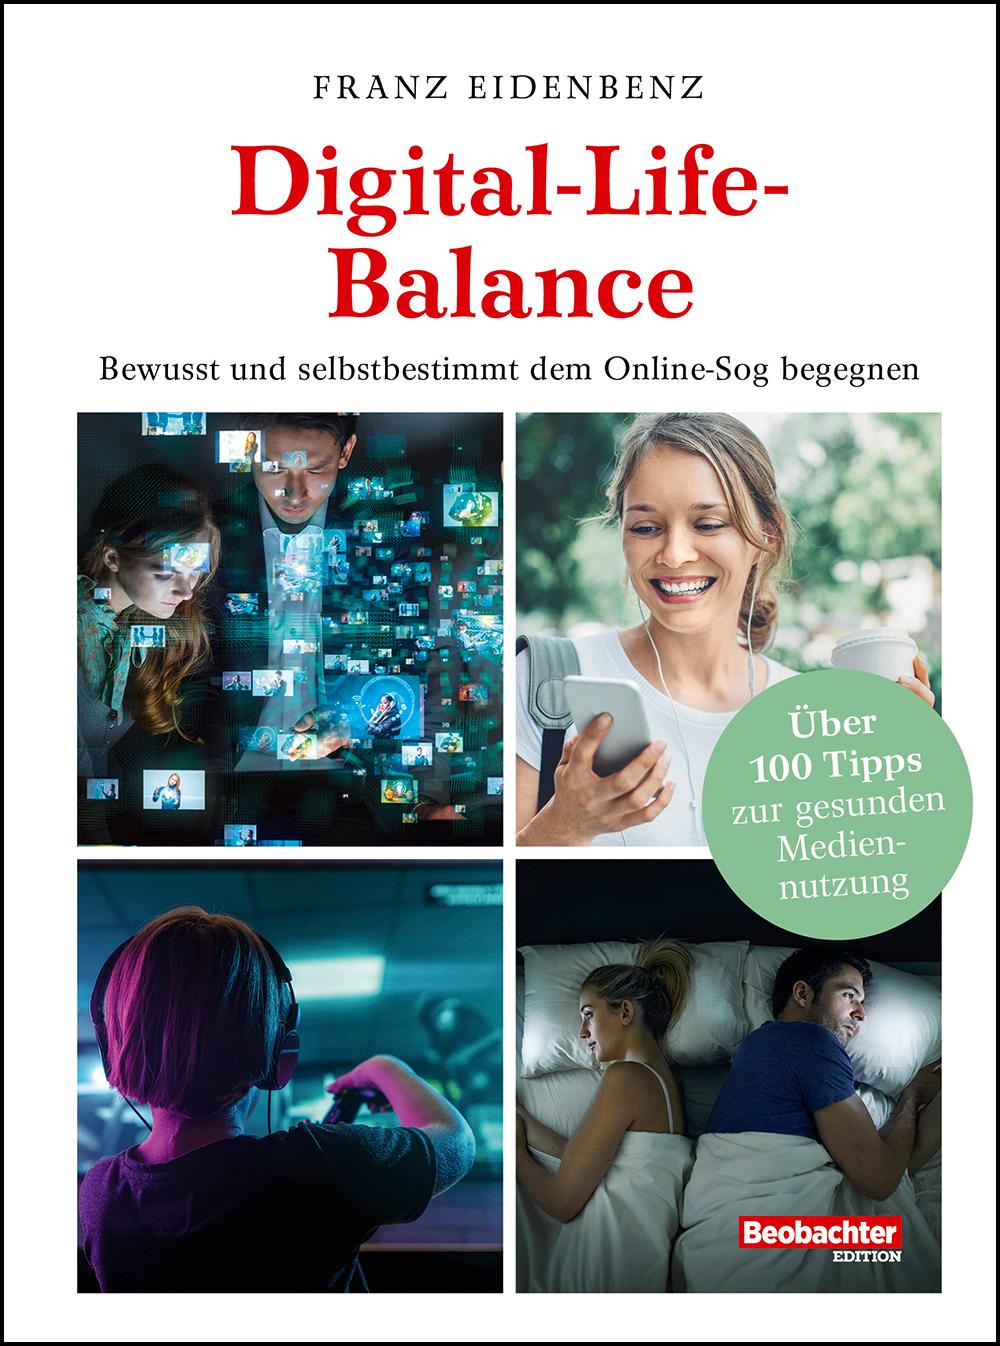 Digital-Life-Balance